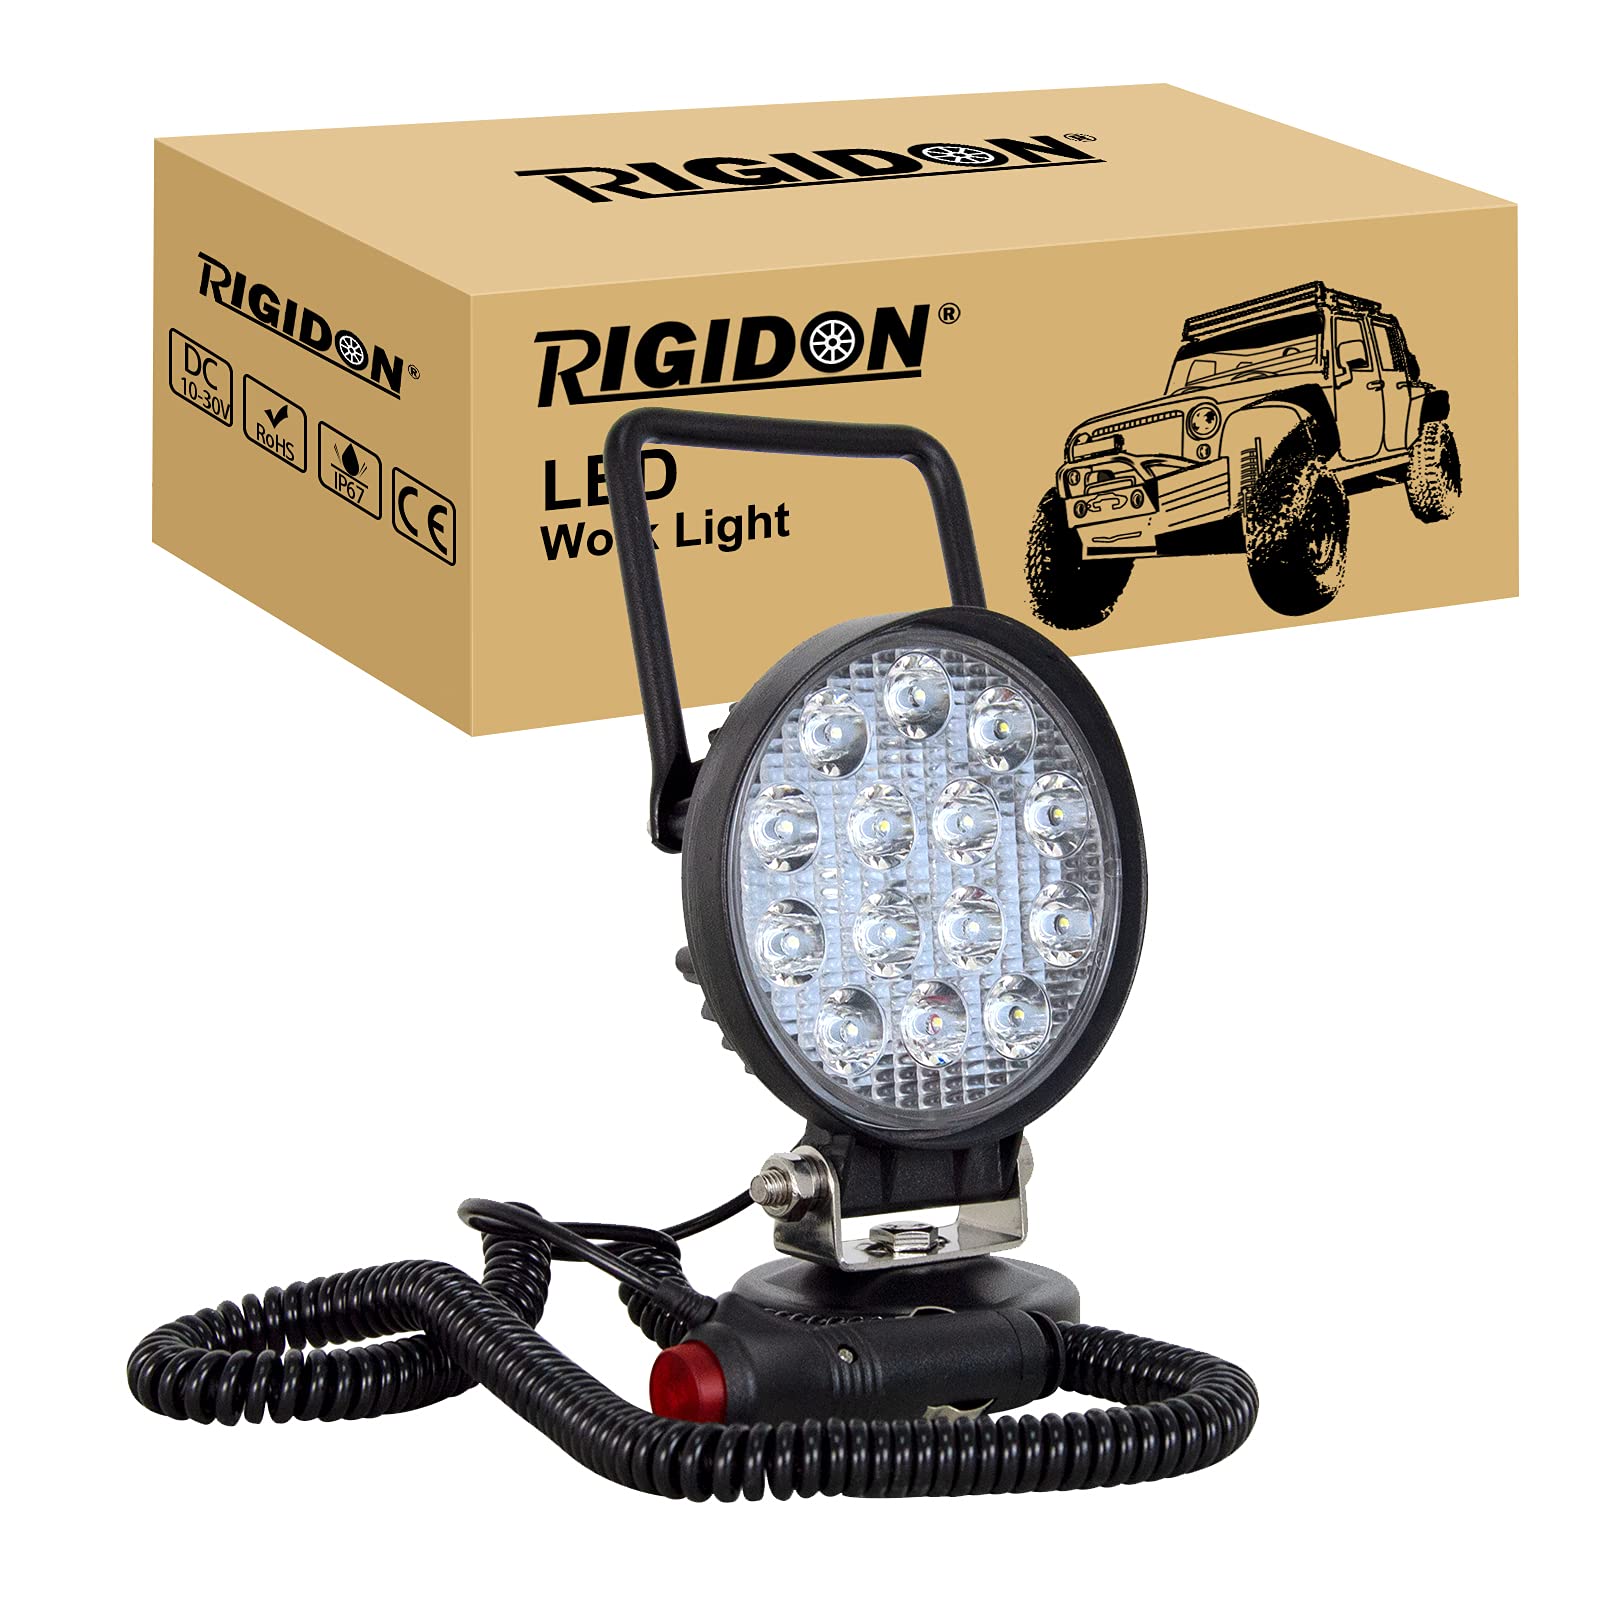 RIGIDON 1 Pcs Led arbeitsscheinwerfer mit magnetfuß, 12V 24V 4 Zoll 10cm 42W led Spot Strahler, offroad beleuchtung für Auto SUV ATV, Traktor, LKW, 4x4, Boot,6000K led suchscheinwerfer, arbeitslicht von RIGIDON